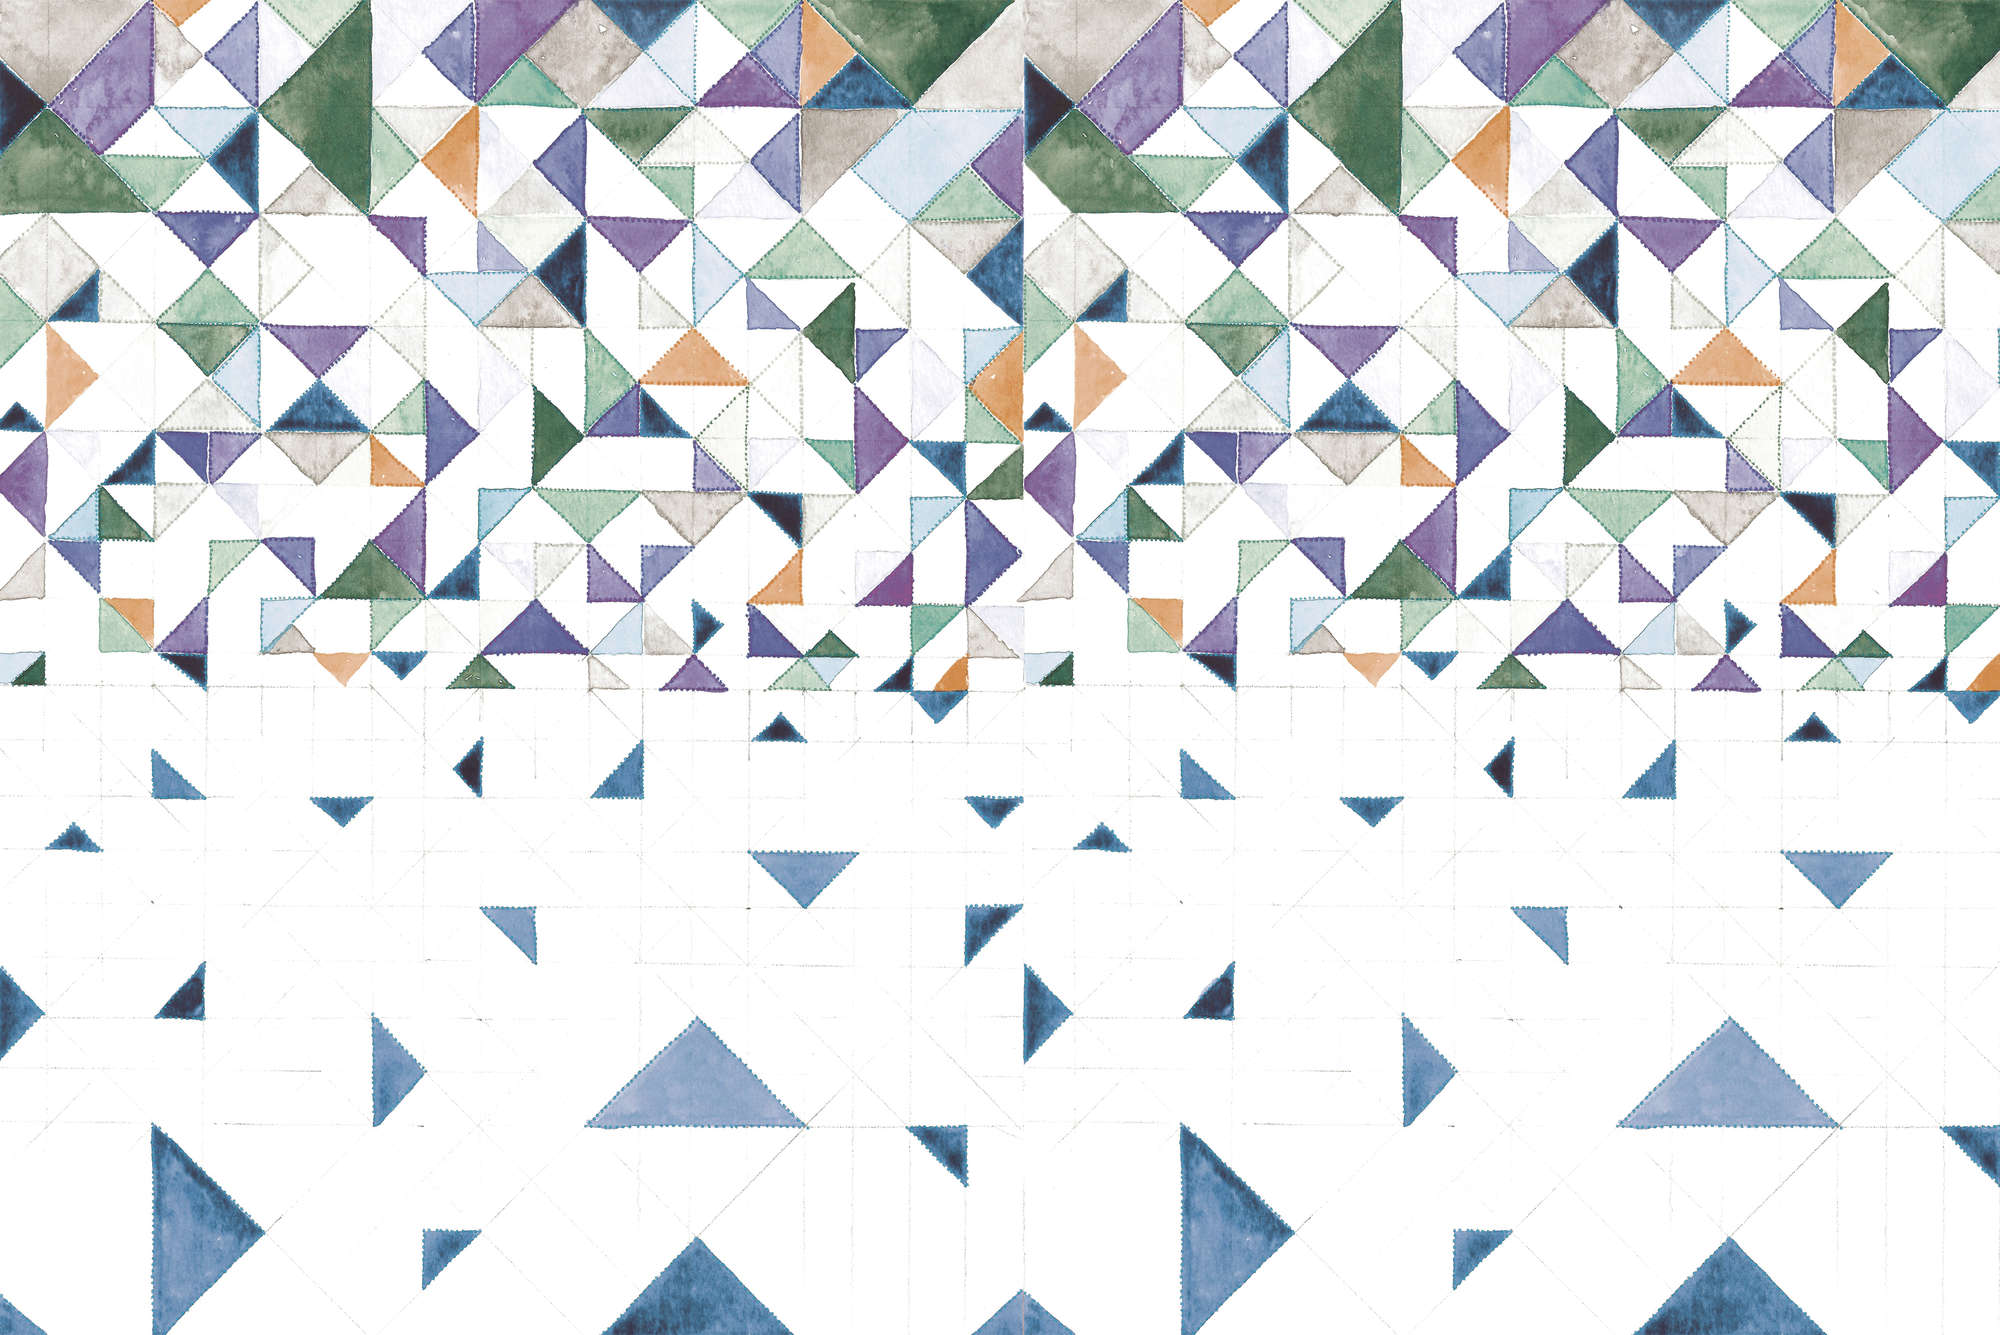             Grafik Fototapete mit Dreieck Muster auf Strukturvlies
        